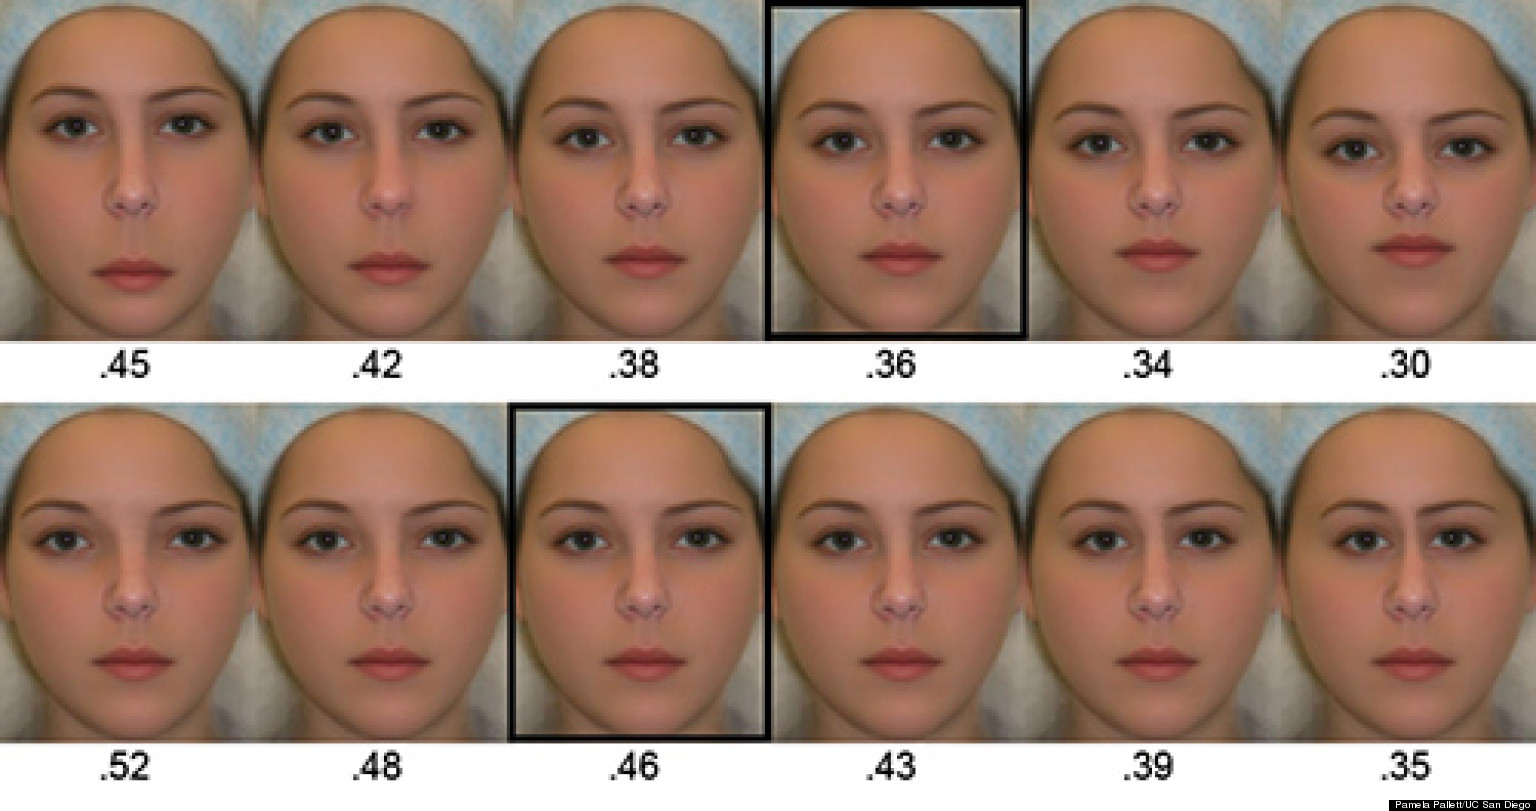 Female Facial Attractiveness 56